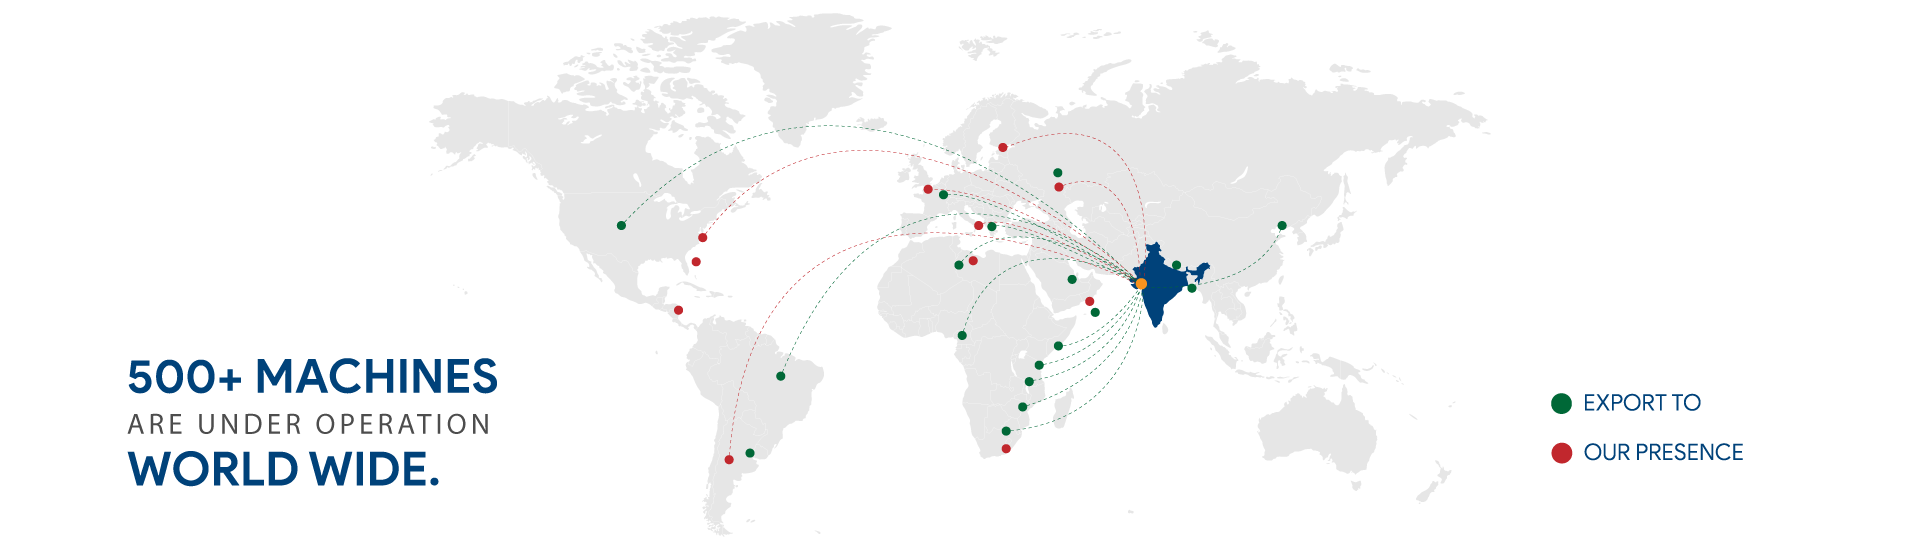 global-presence-map-01